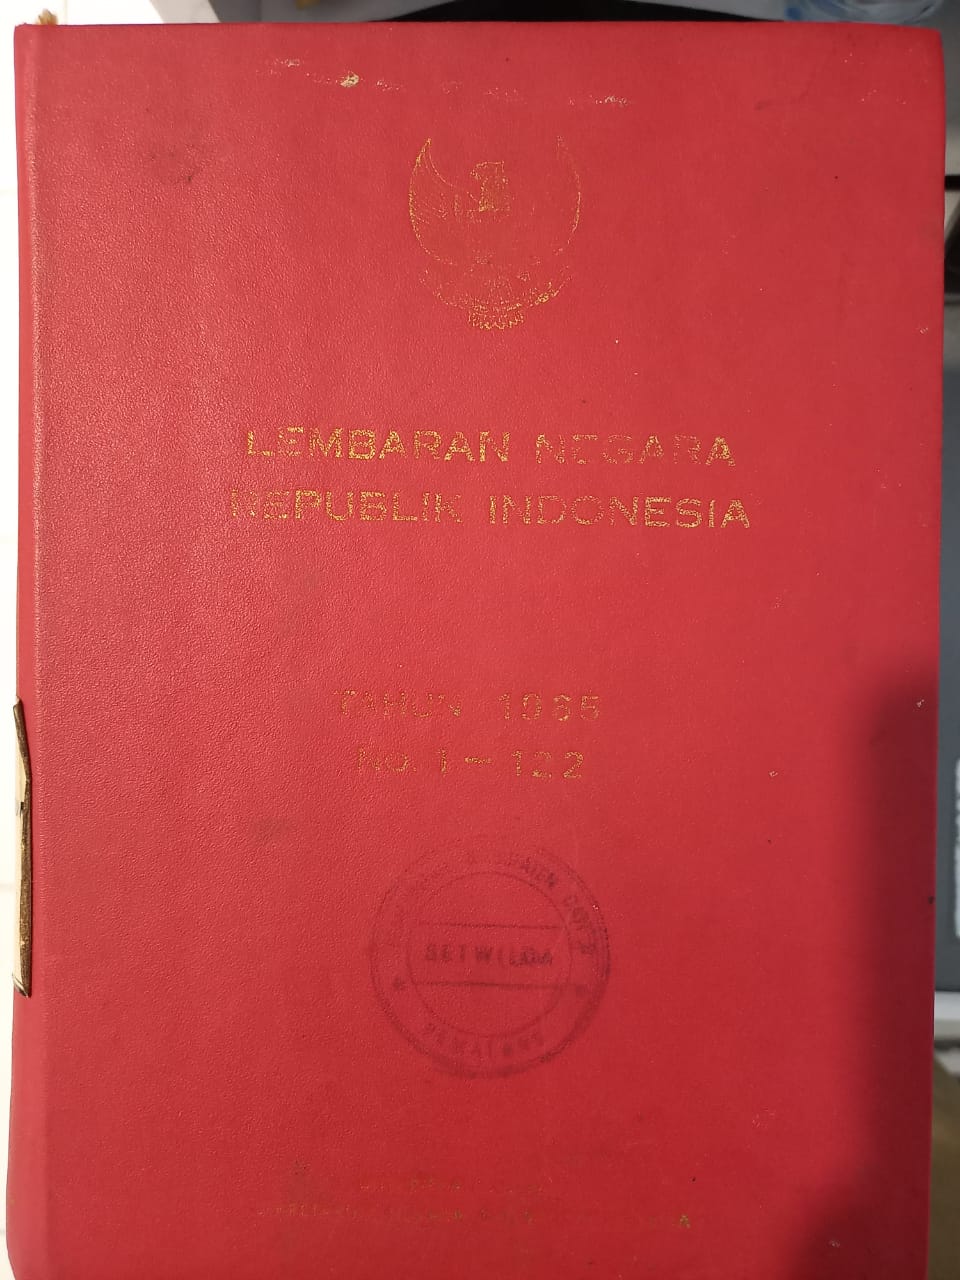 LEMBARAN NEGARA REPUBLIK INDONESIA TAHUN 1965 NO.1 - 122